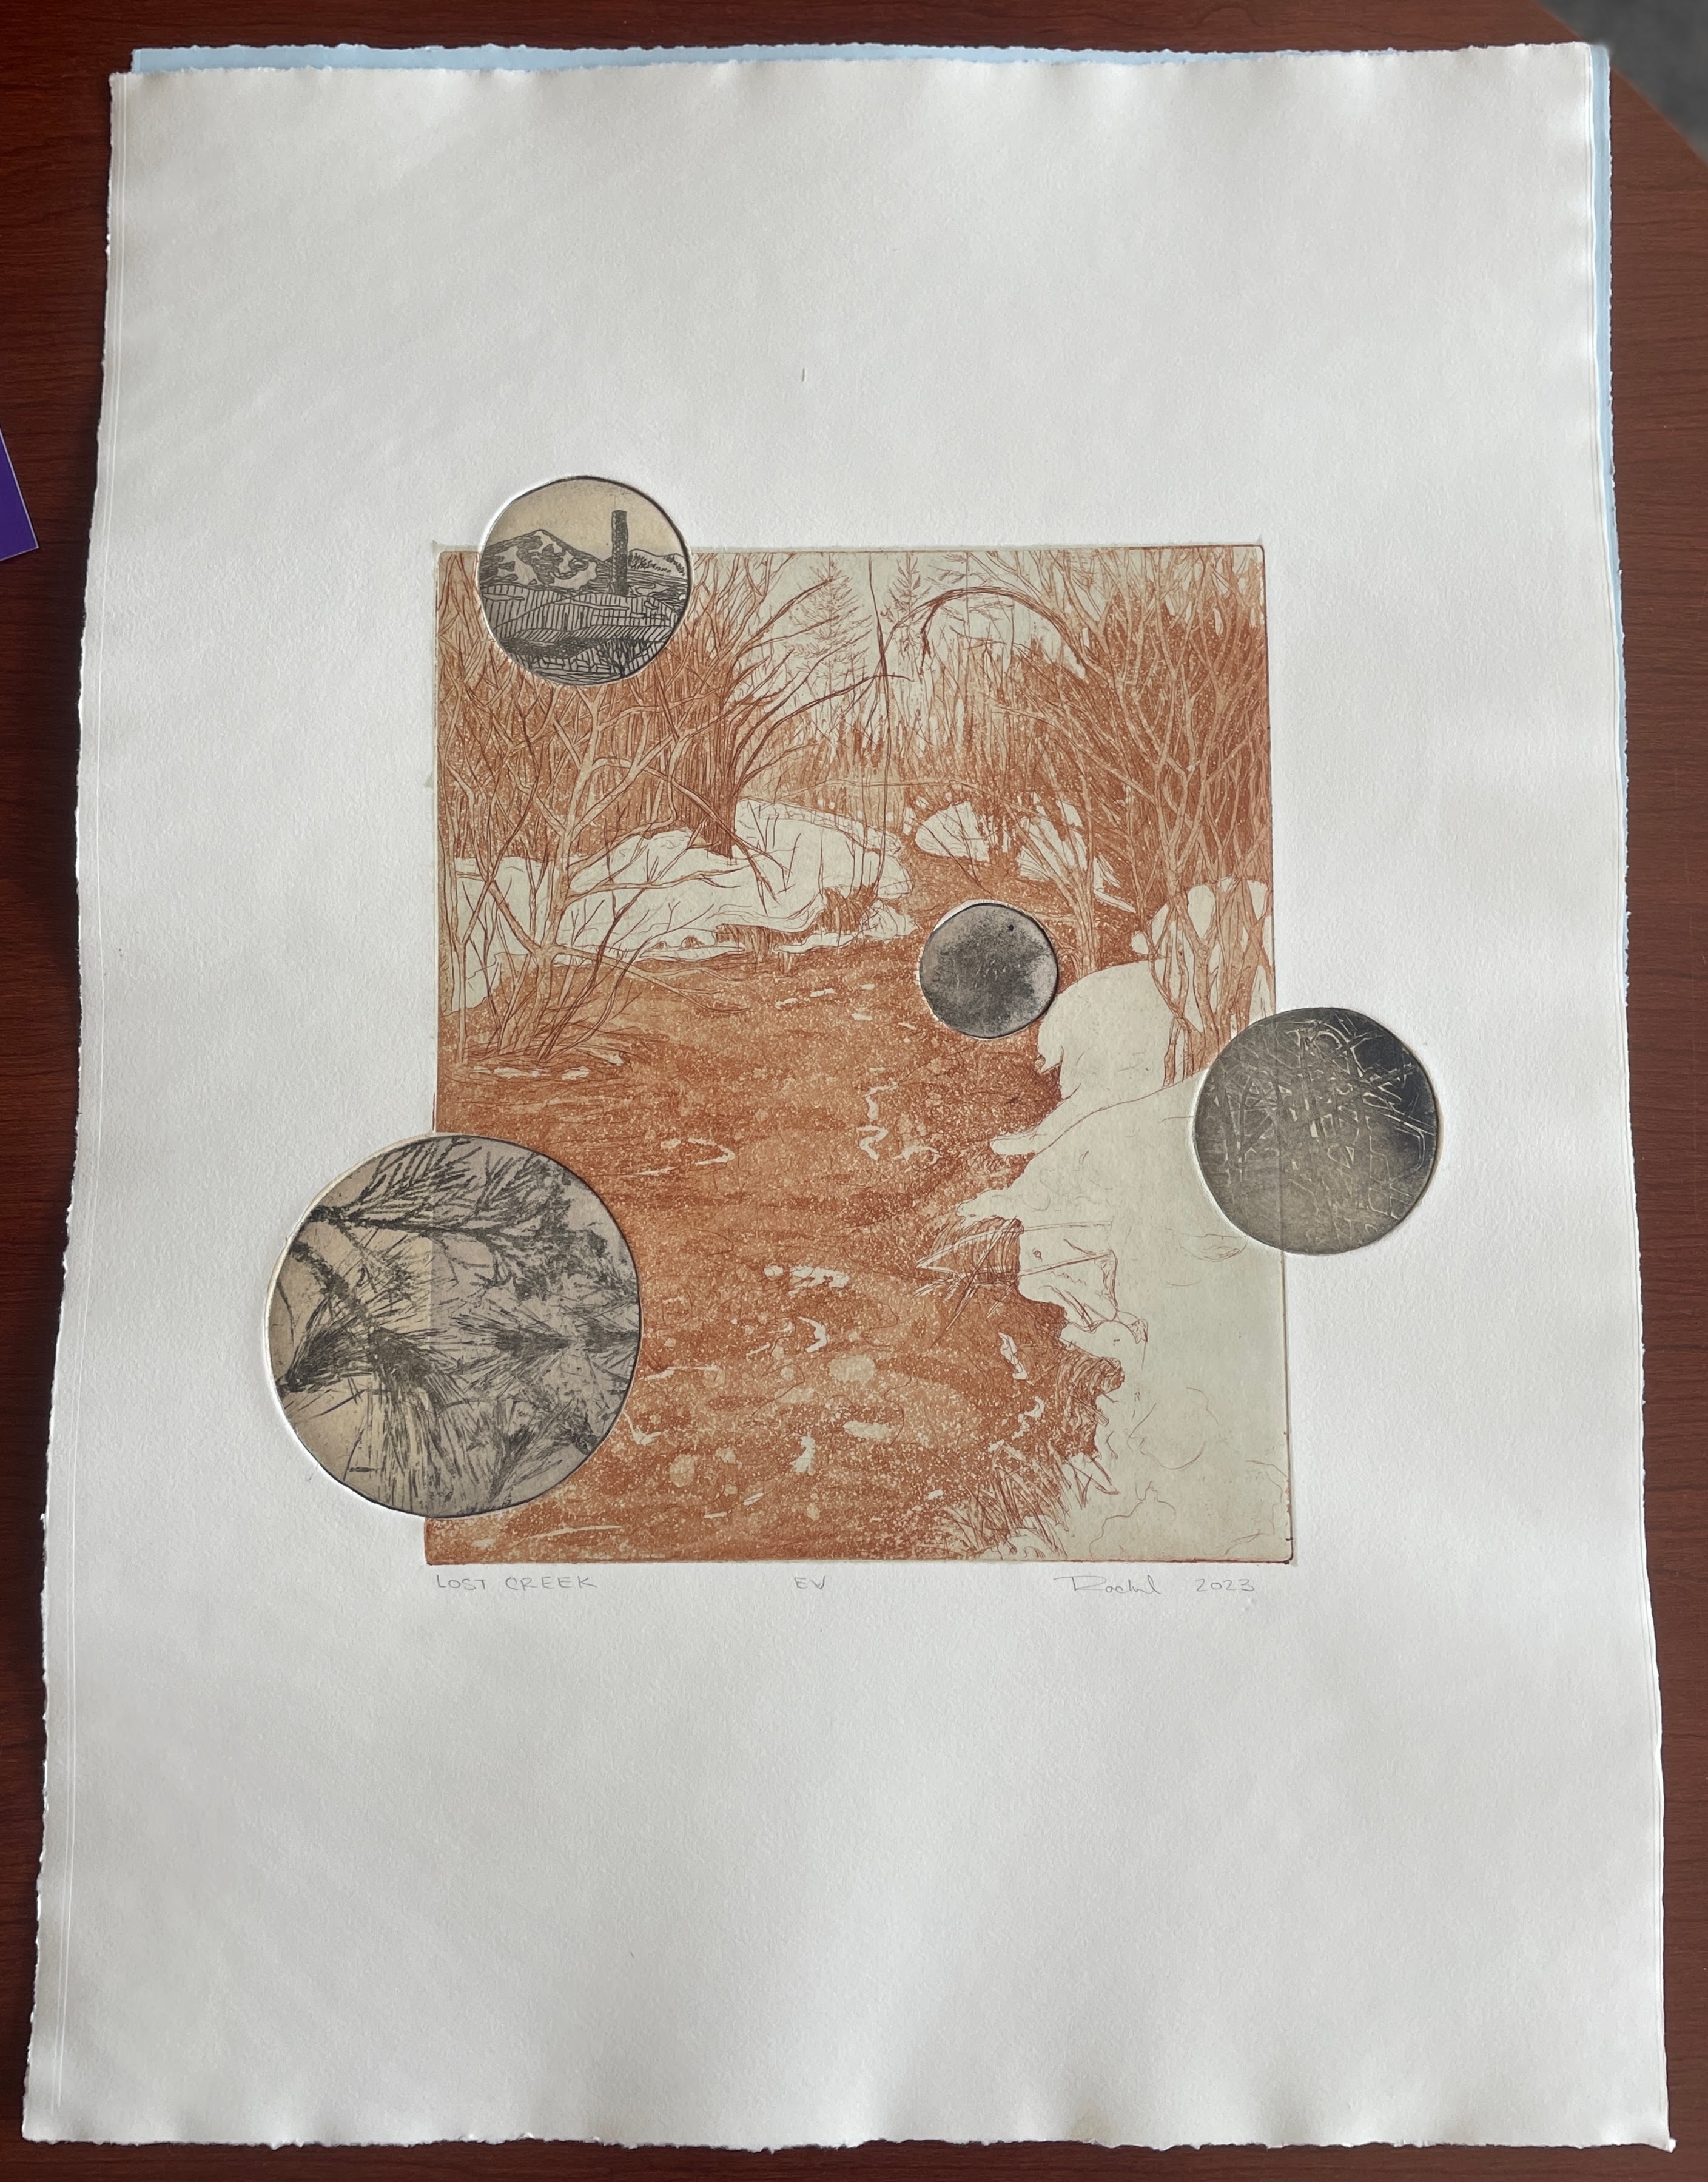 Image of Rachel Ingle's print of Anaconda and Lost Creek